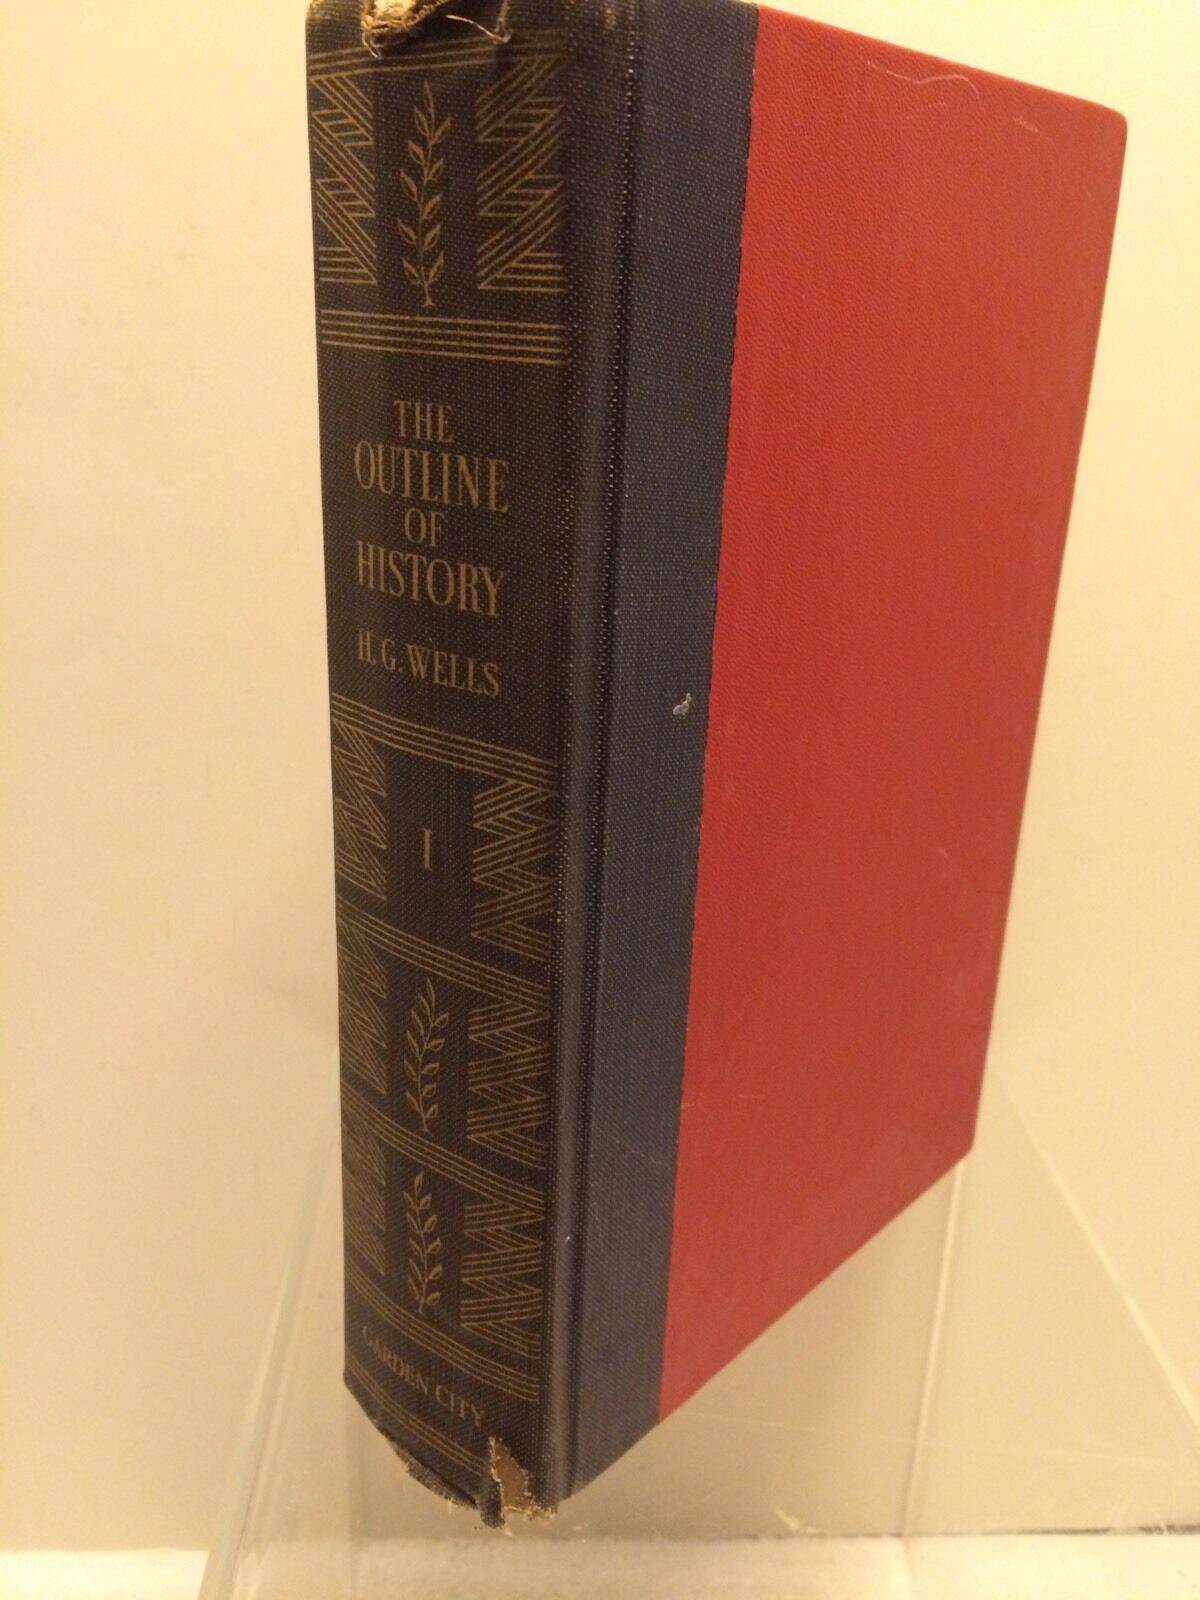 THE OUTLINE OF HISTORY, H. G. Wells, Hardbound, c. 1949 Doubleday, VOLUME I